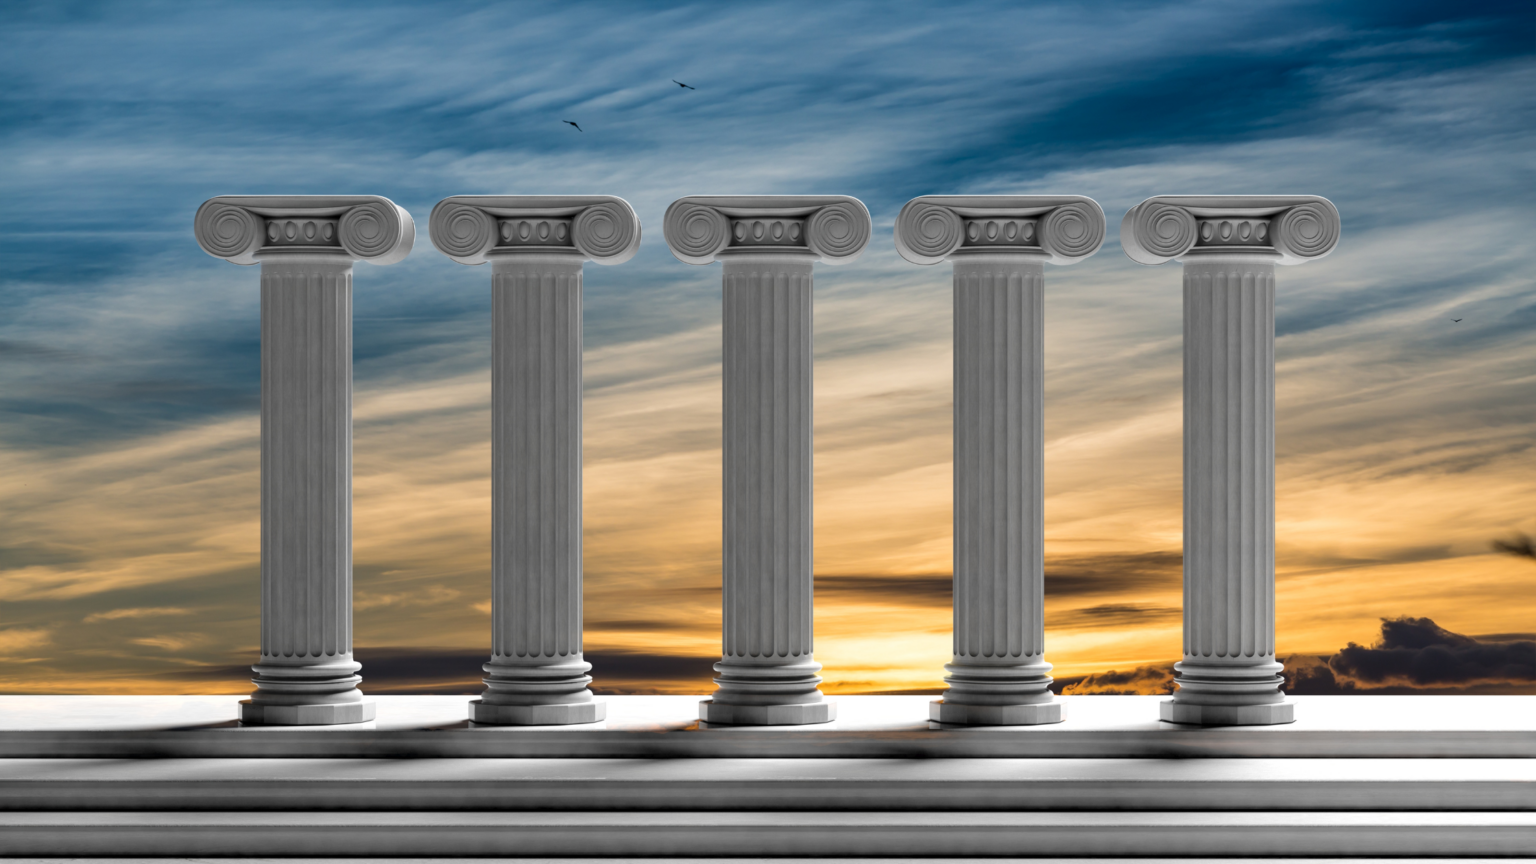 five pillars signifying content pillars for social media